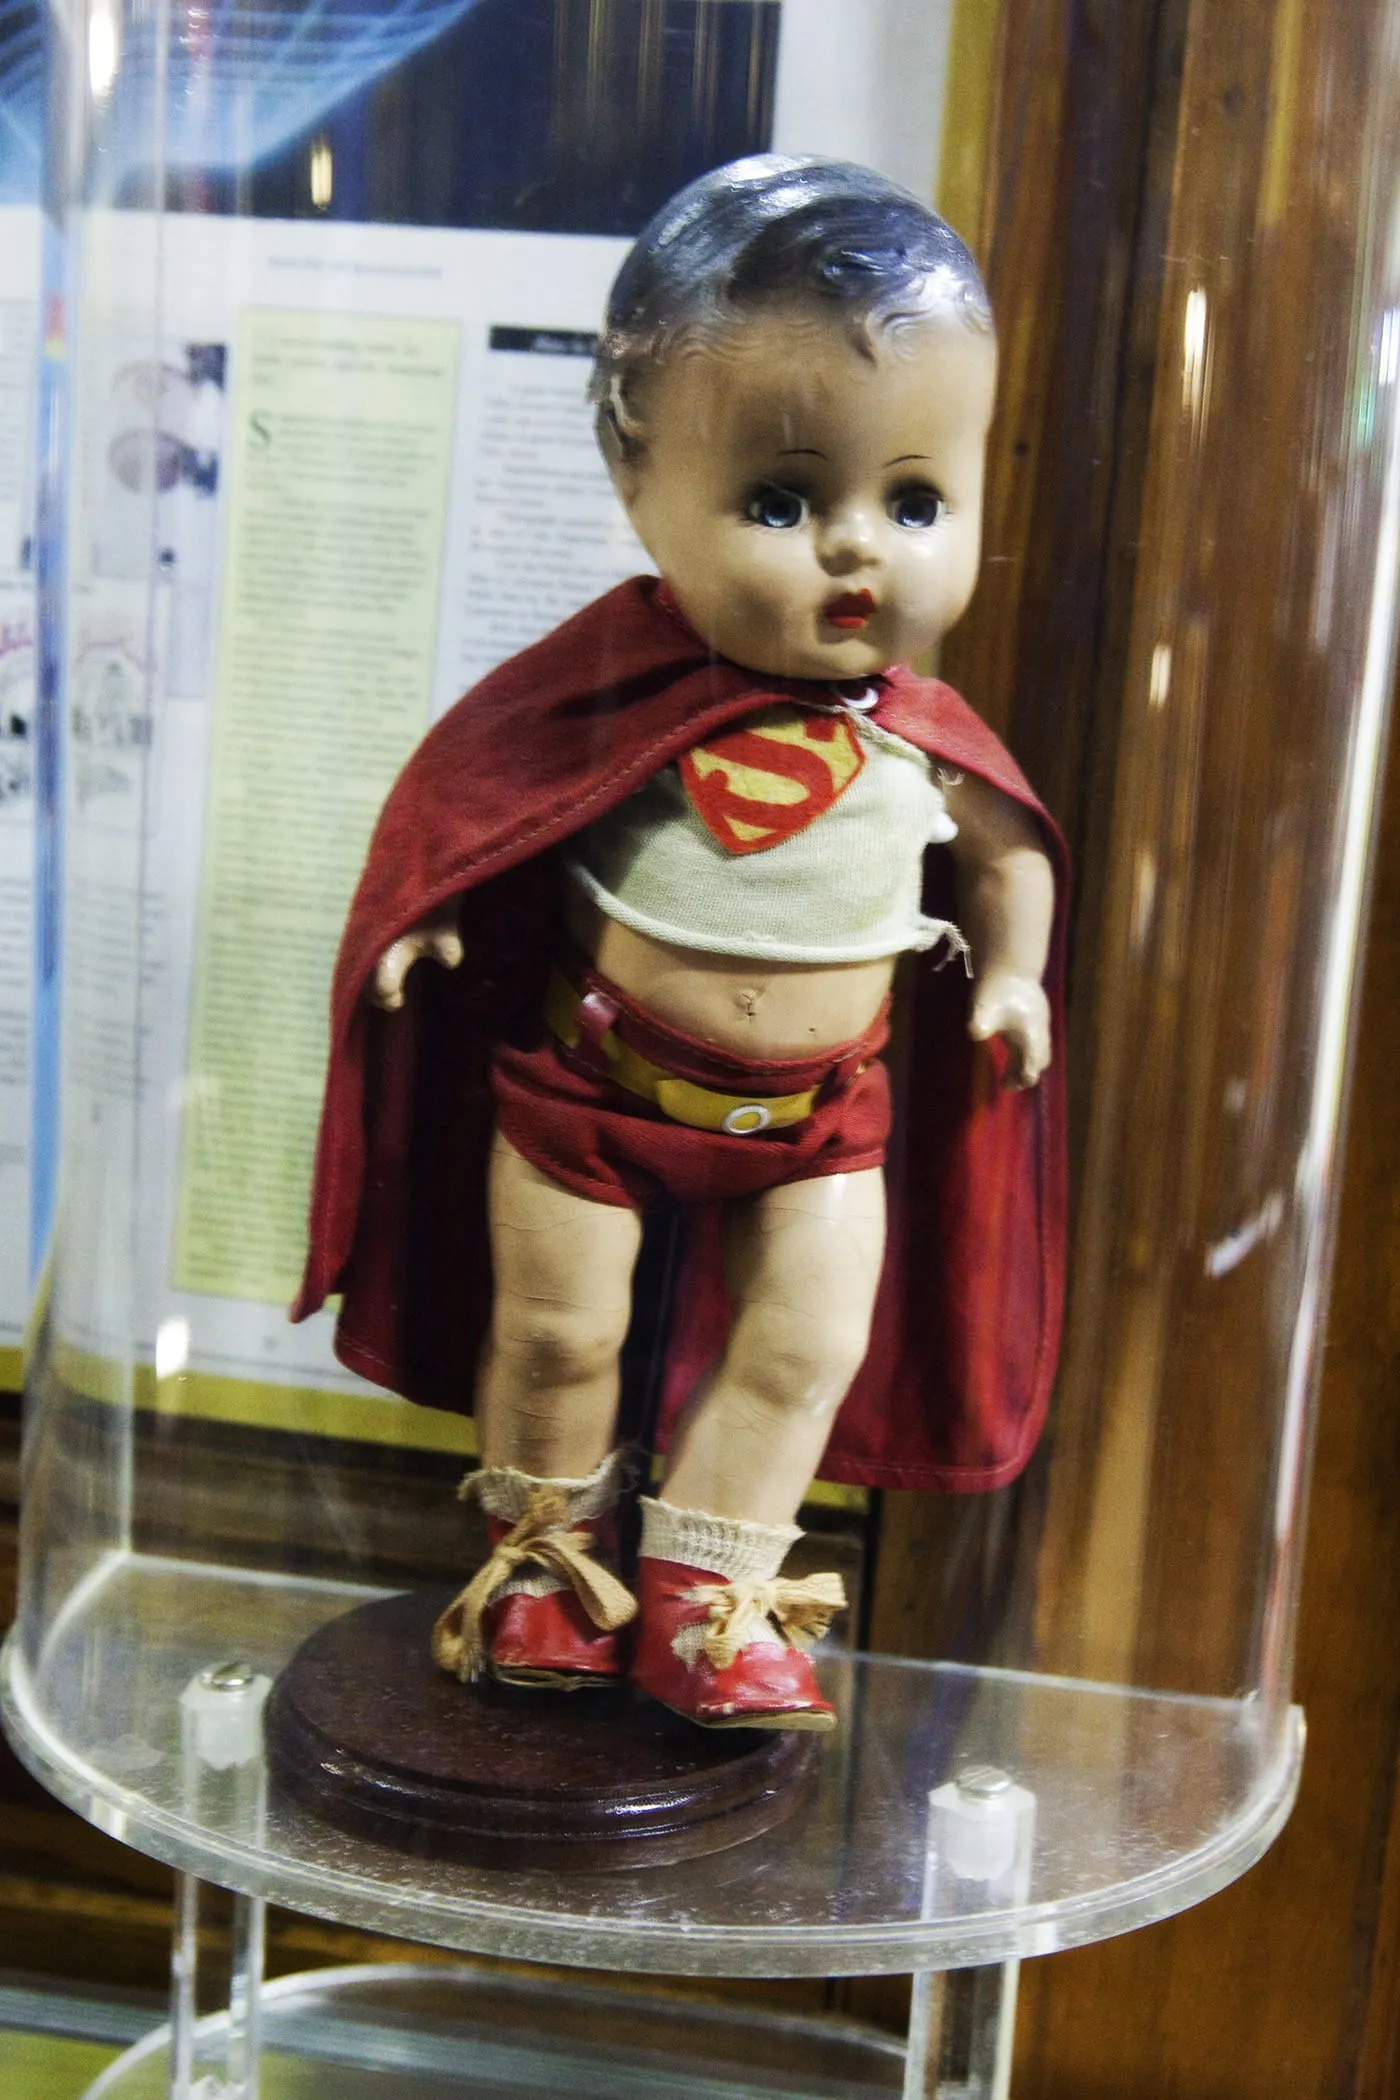 Superman doll at the Super Museum (Superman Museum) in Metropolis, Illinois.